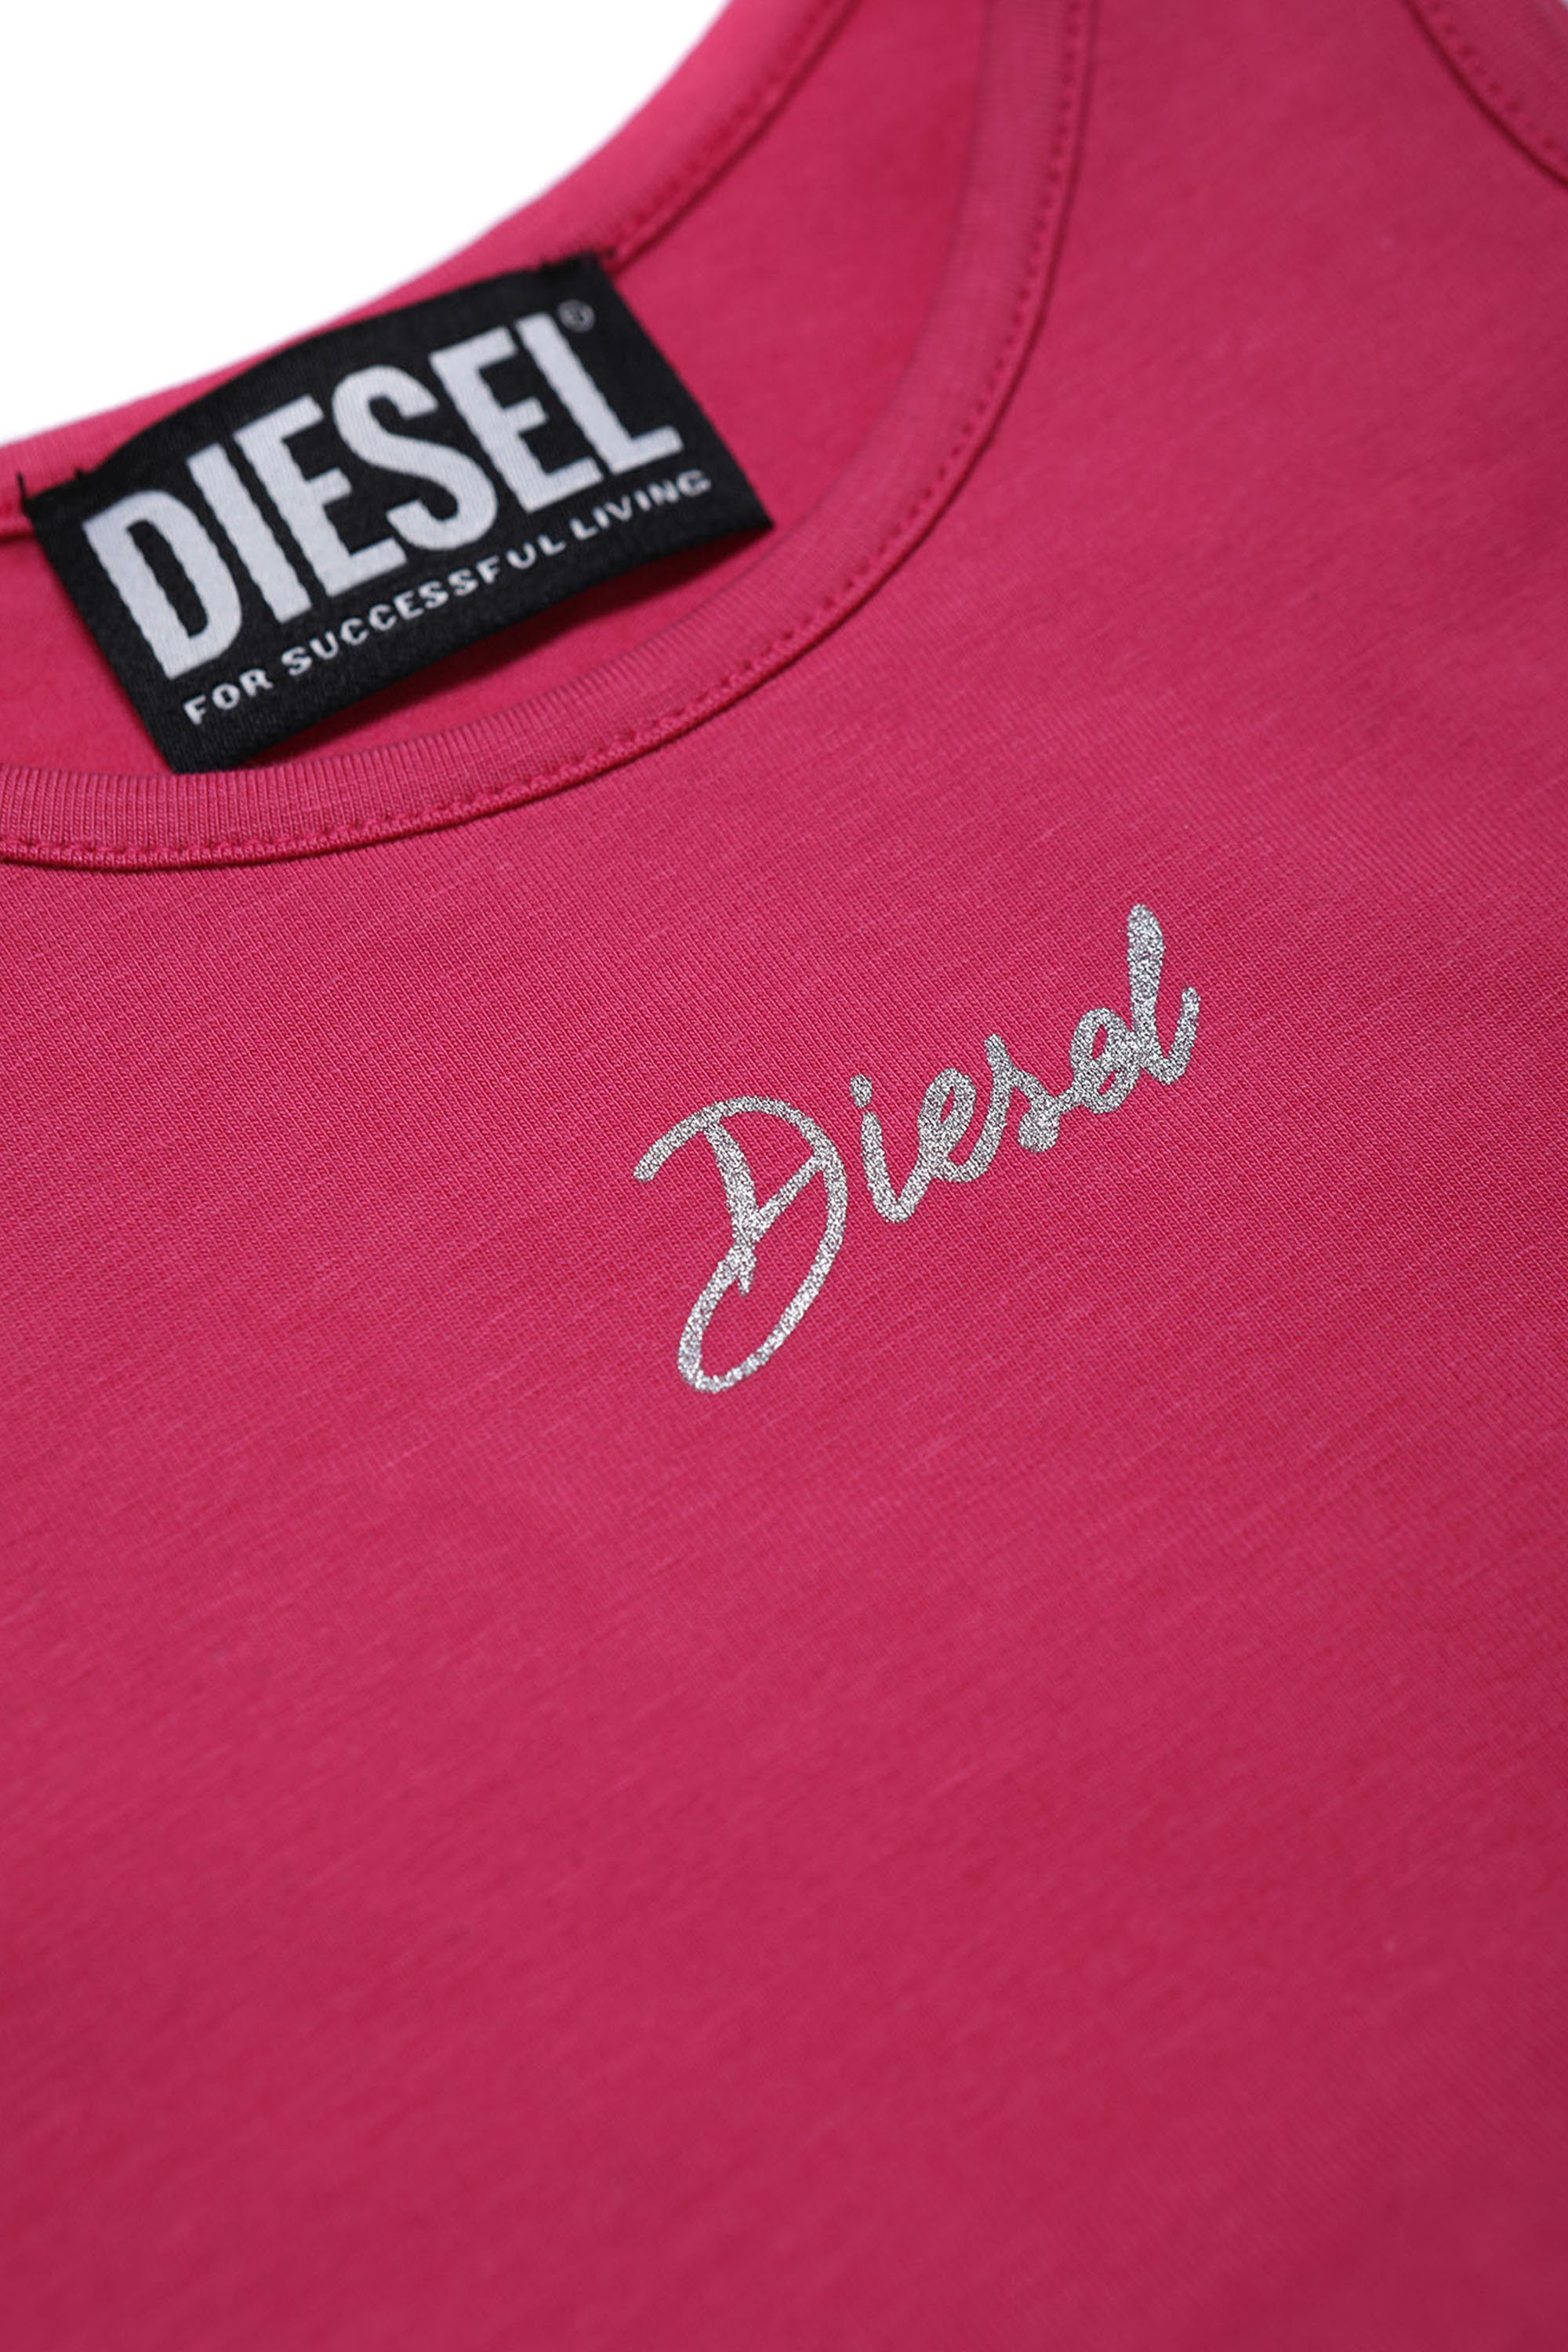 Diesel - TRISAB, Rosa - Image 3